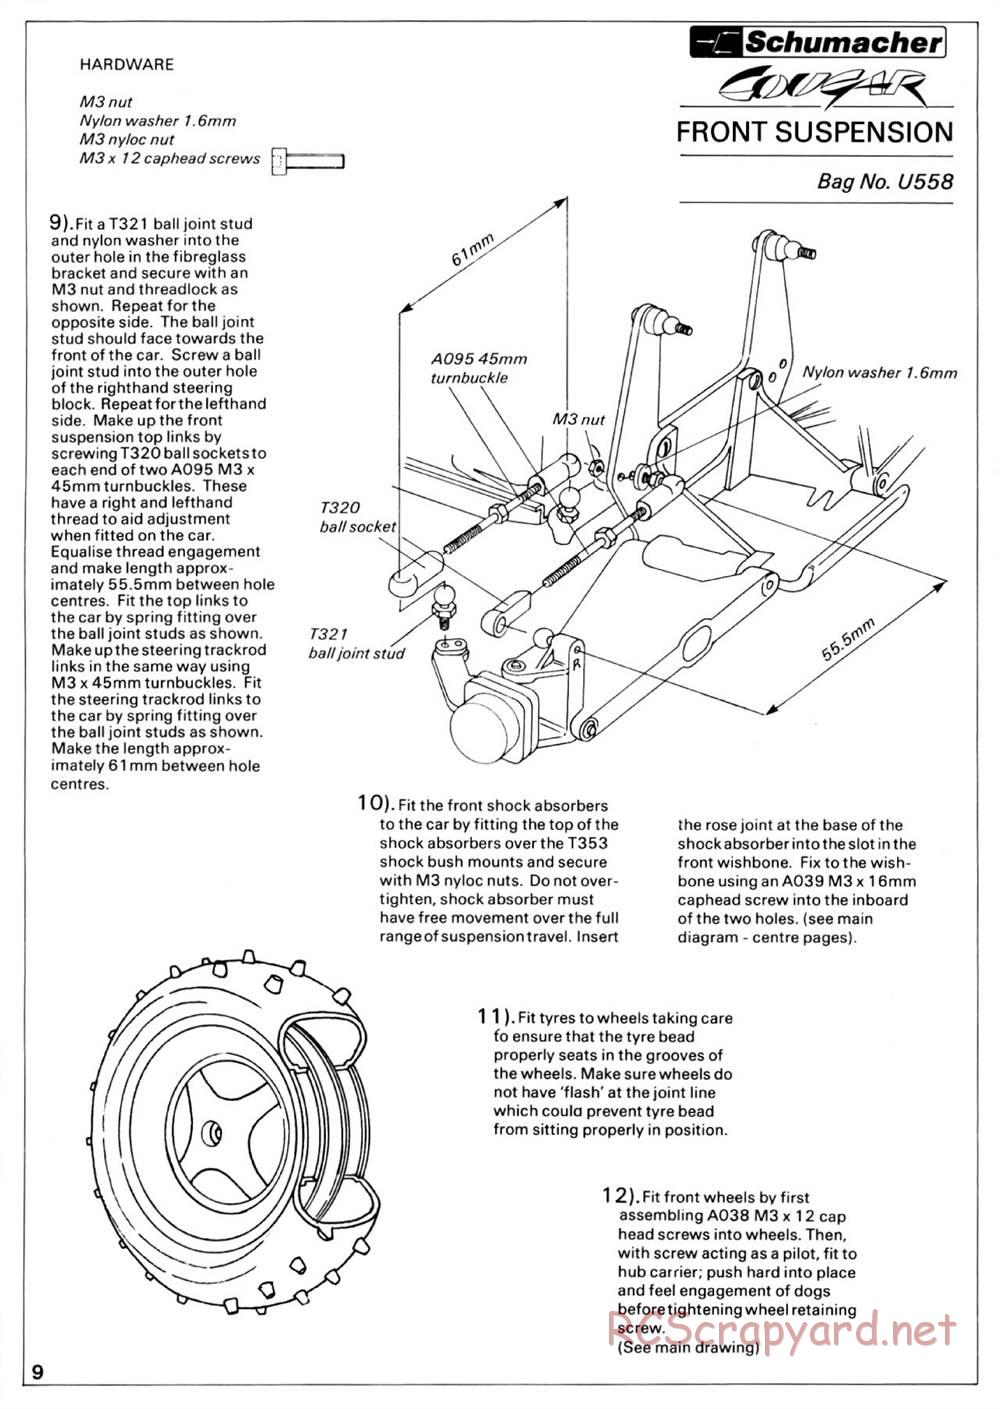 Schumacher - Cougar - Manual - Page 10